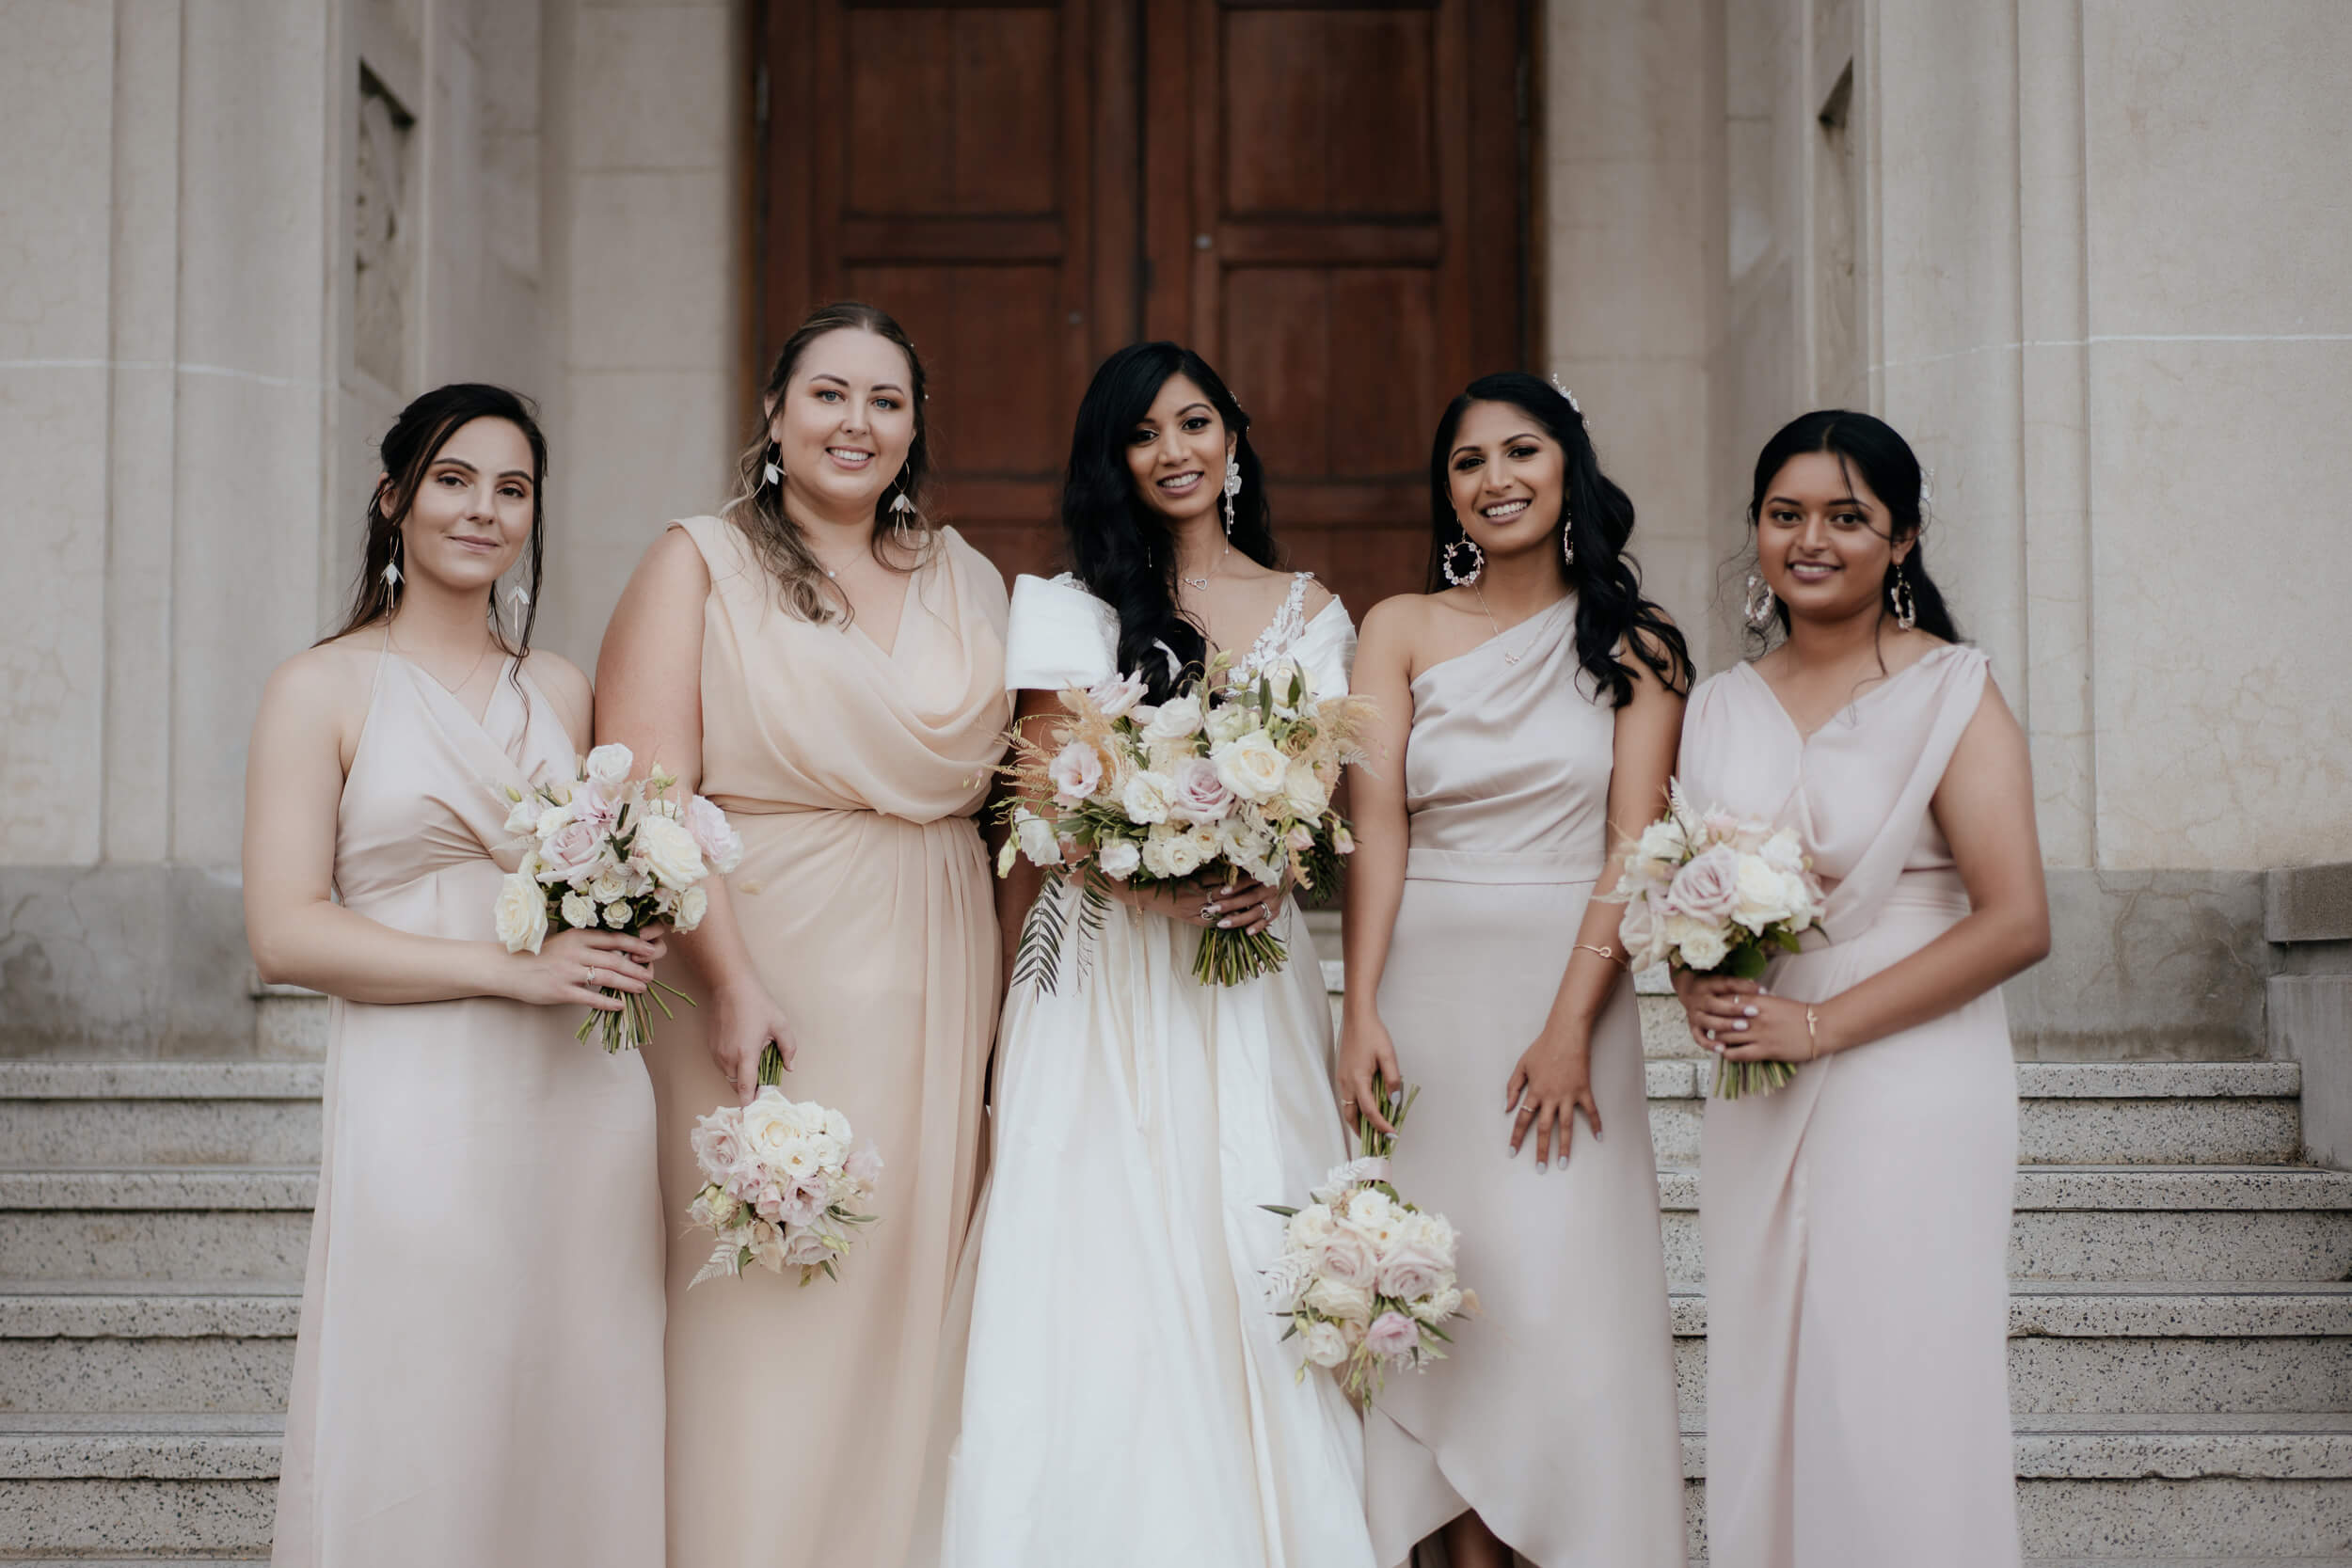 Vinka Design Real Wedding with Vinka Bride Prianka in full length wedding dress - bride poses with bridesmaids